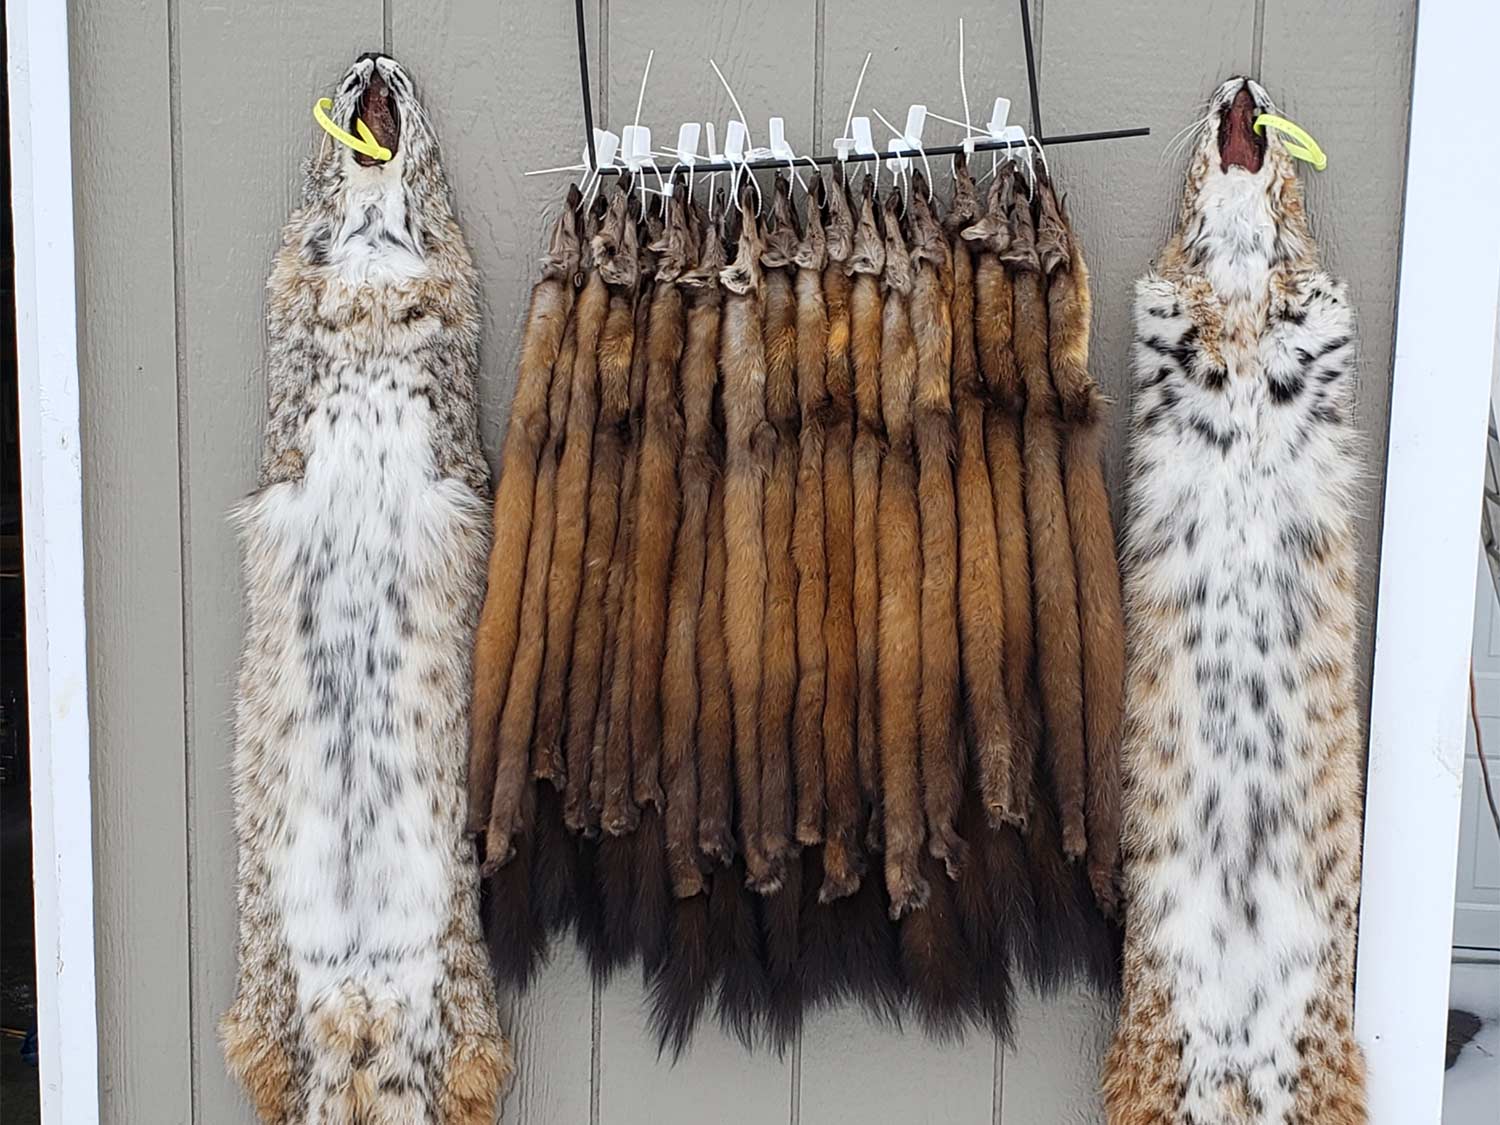 A bunch of marten and bobcat pelts hanging on a door.